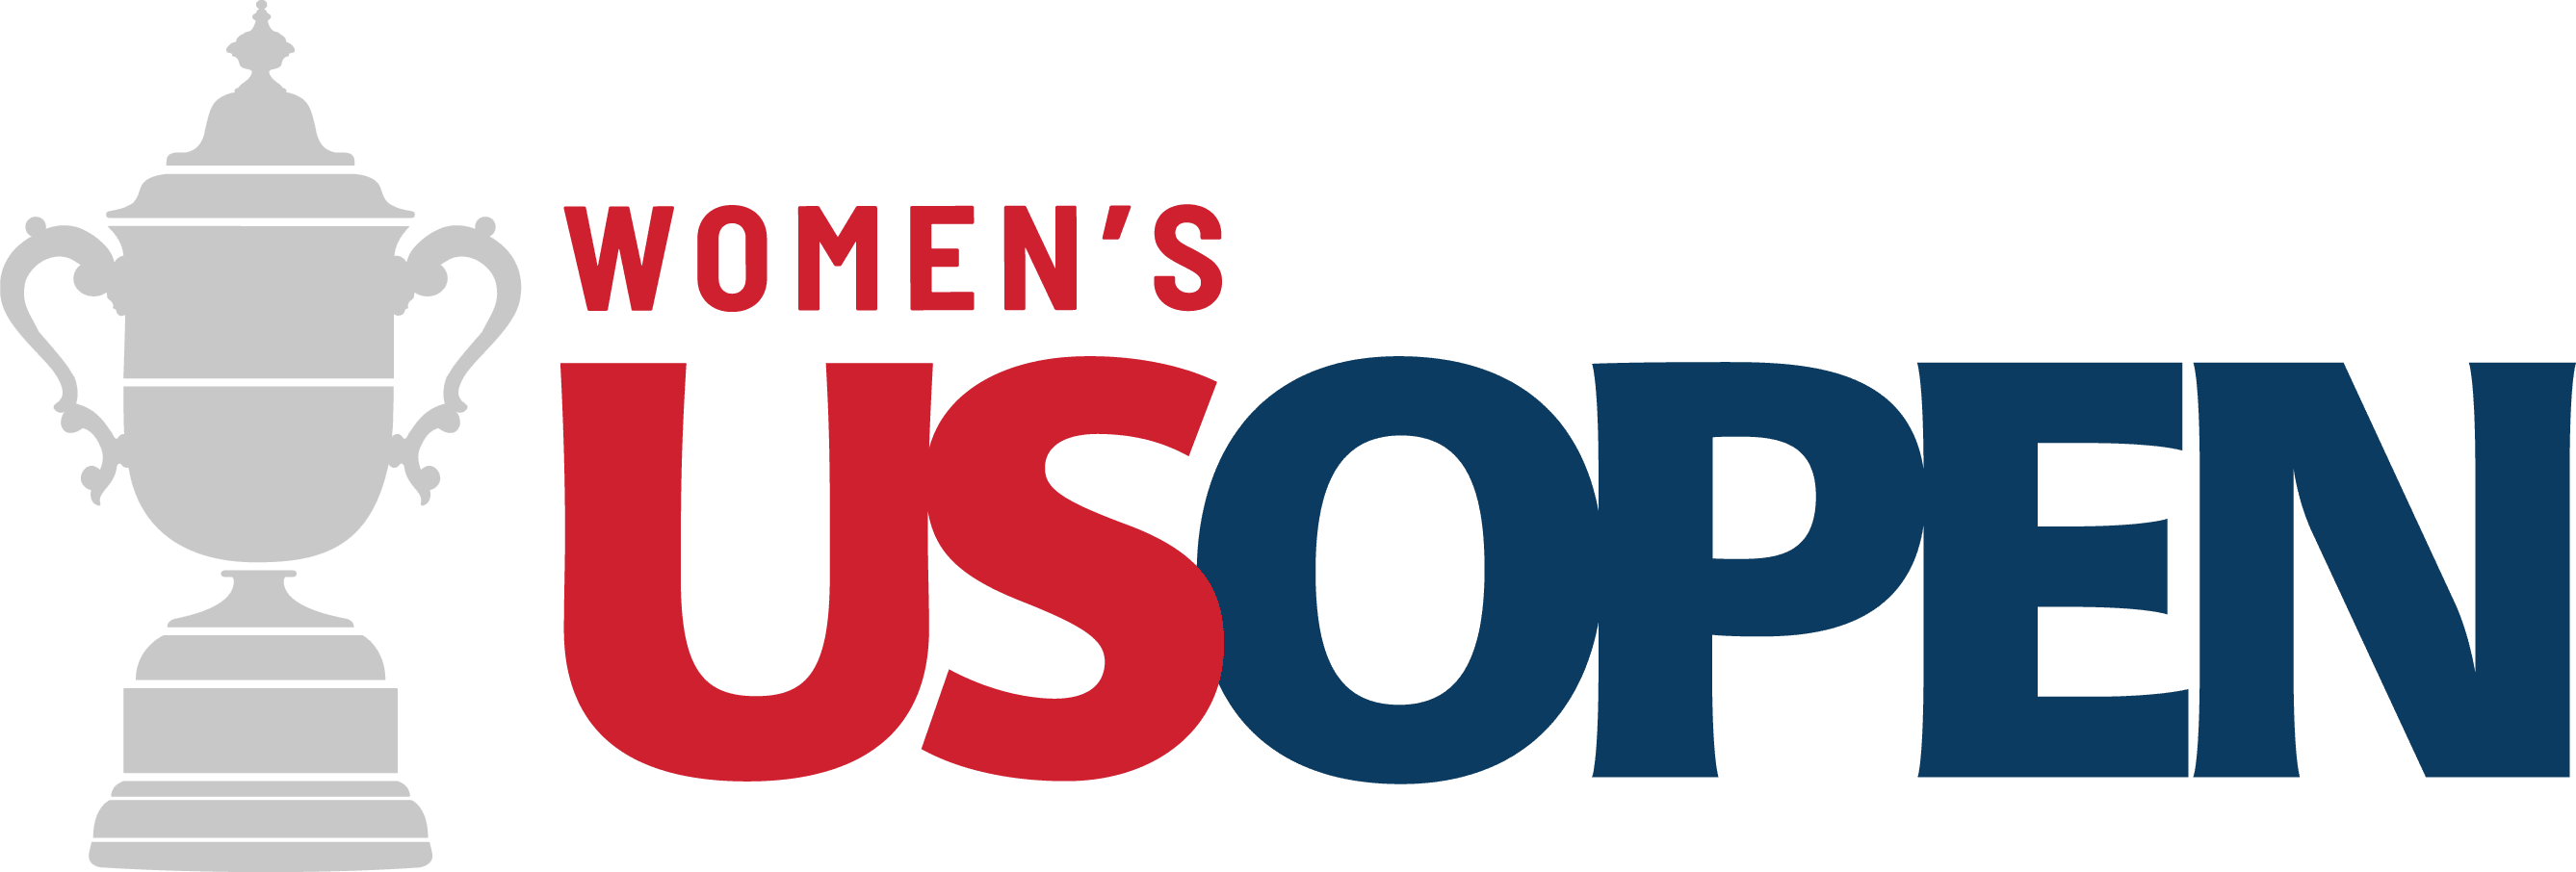 Ally sponsorship of USGA increases US Women's Open purse to $12m |  SportBusiness